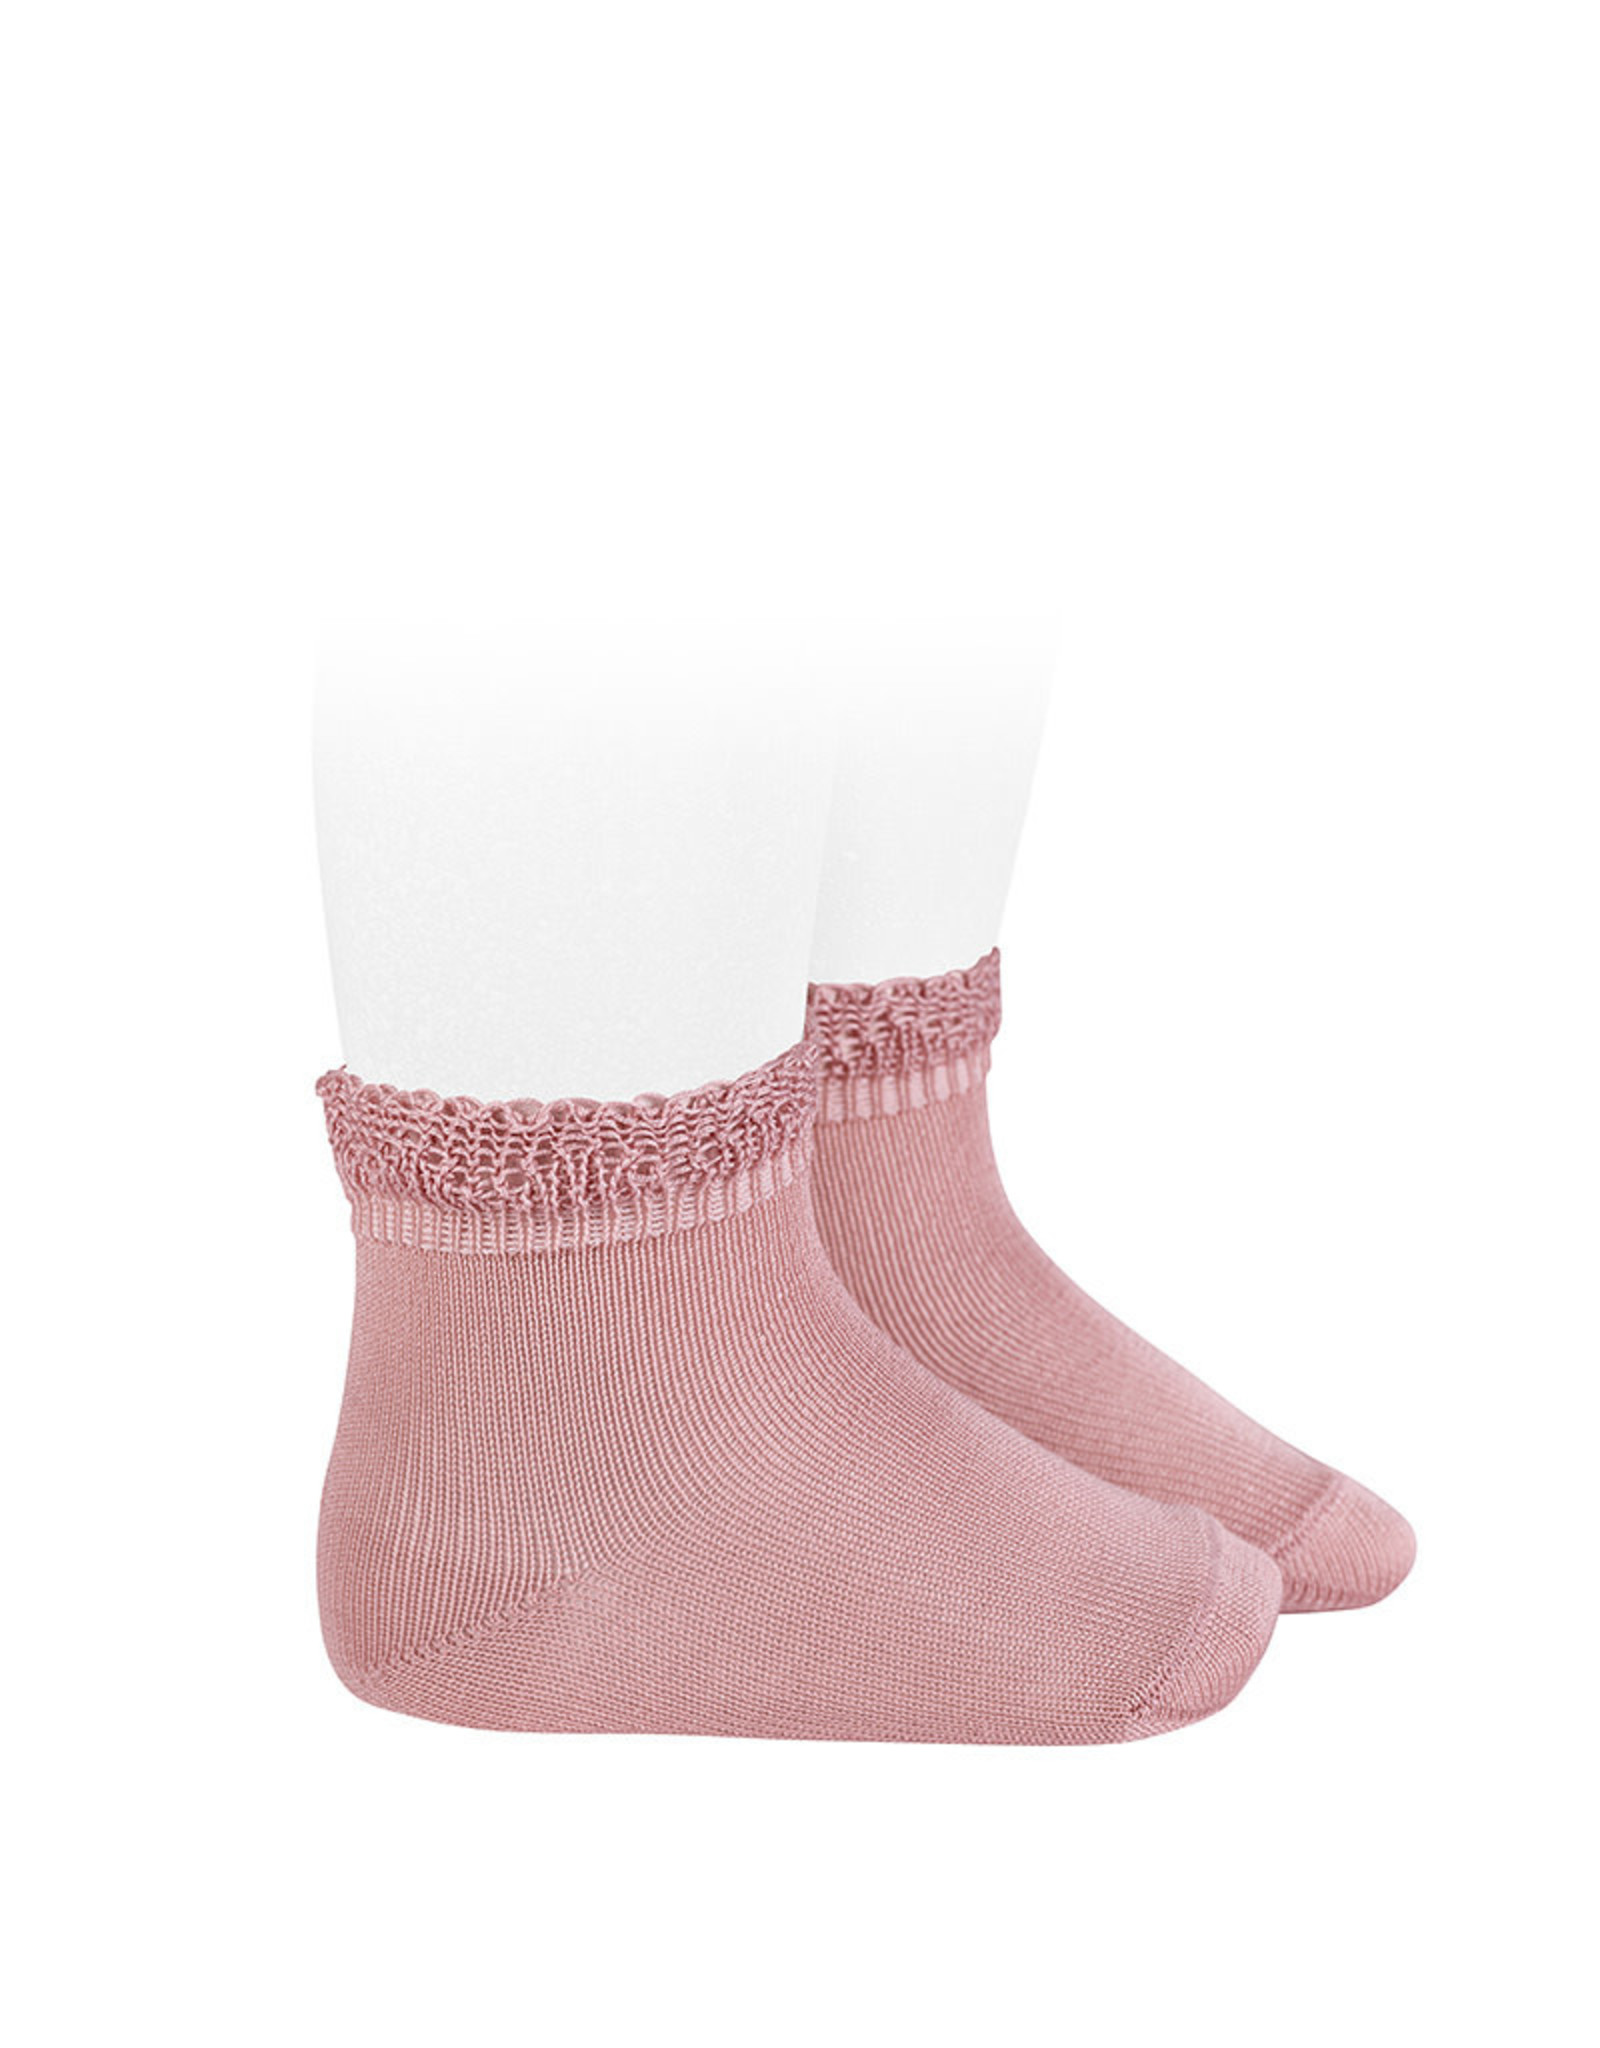 CONDOR Pale Pink Openwork Cuff Short Socks